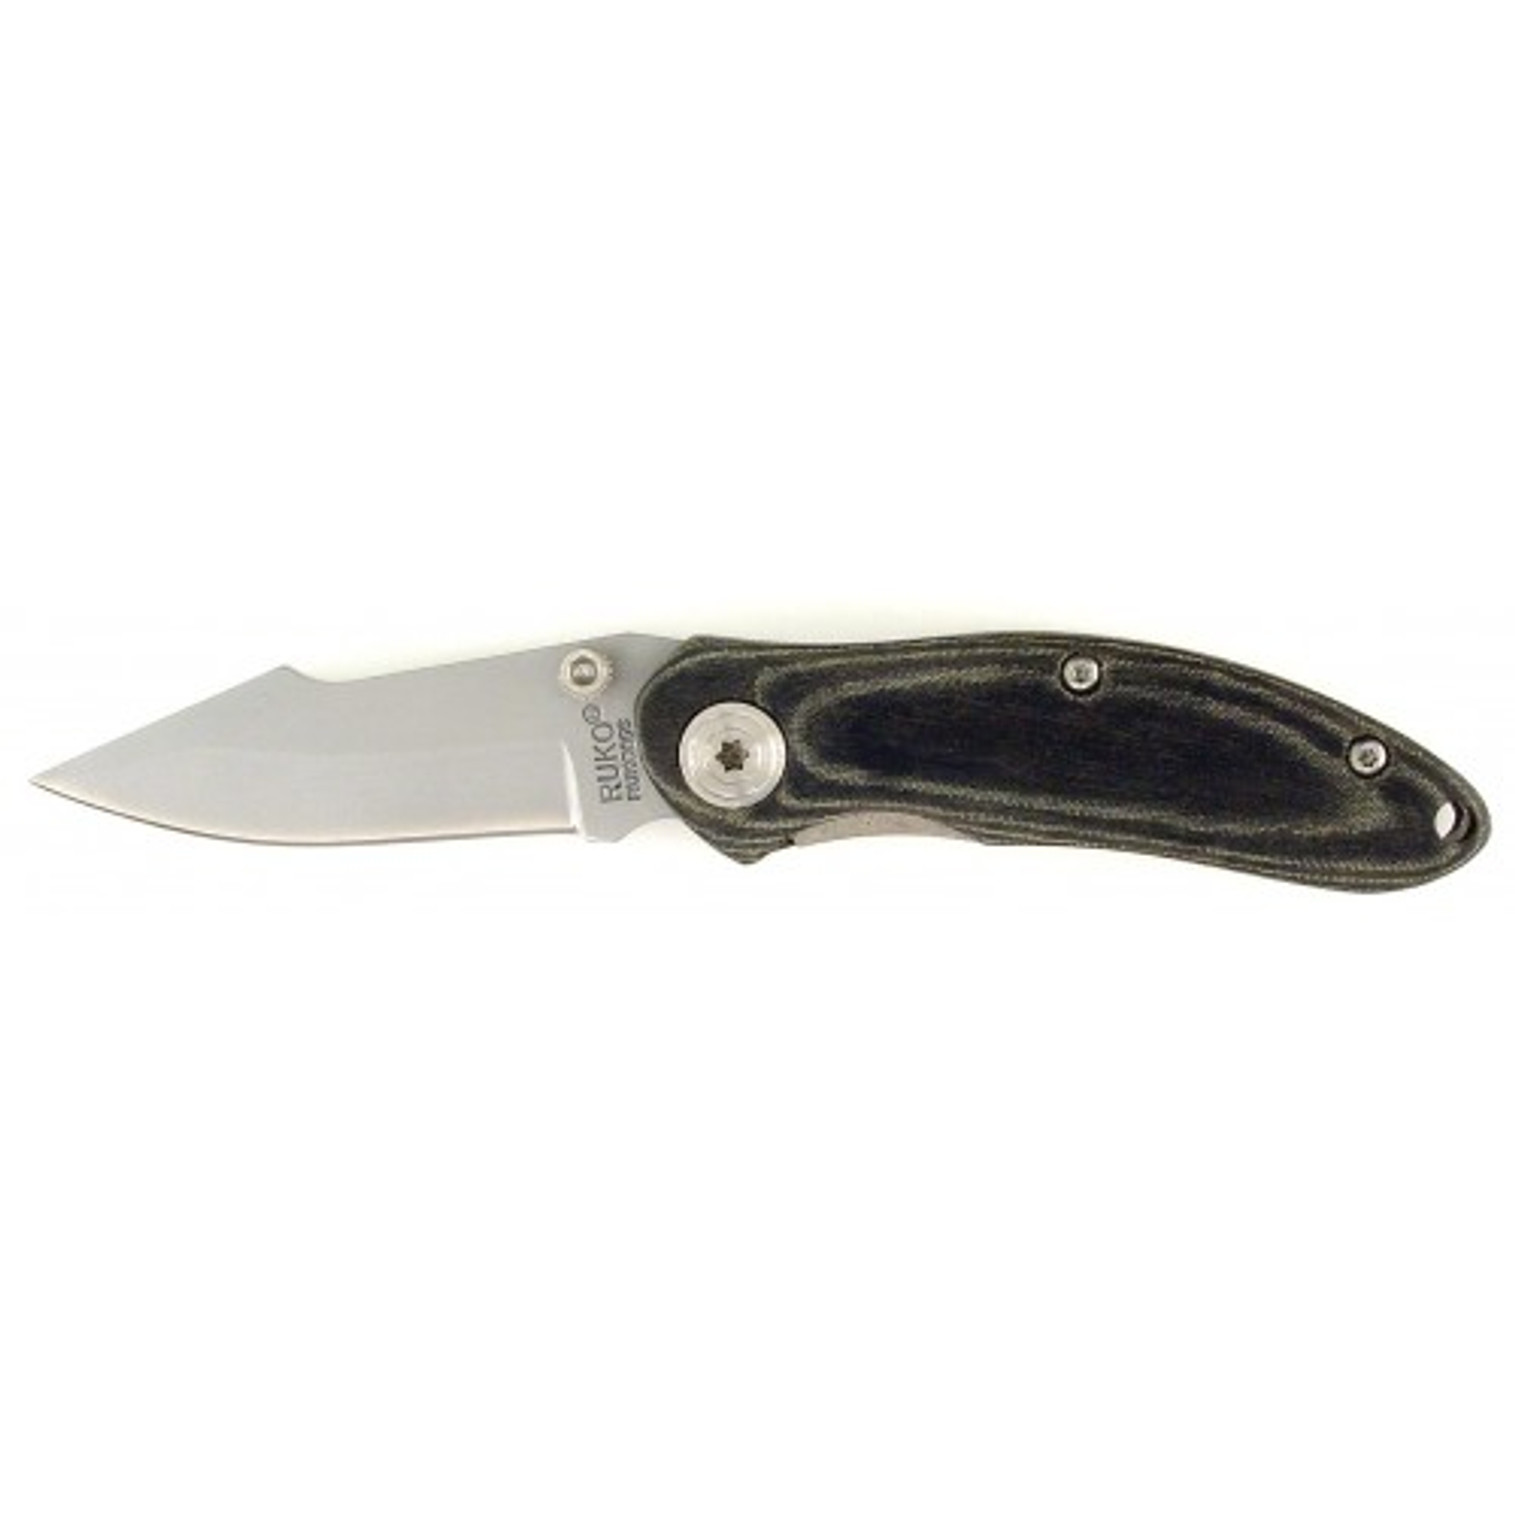 RUKO RUK0056, 420A, 2-1/4" Folding Blade Pocket Knife, Linen Micarta Handle